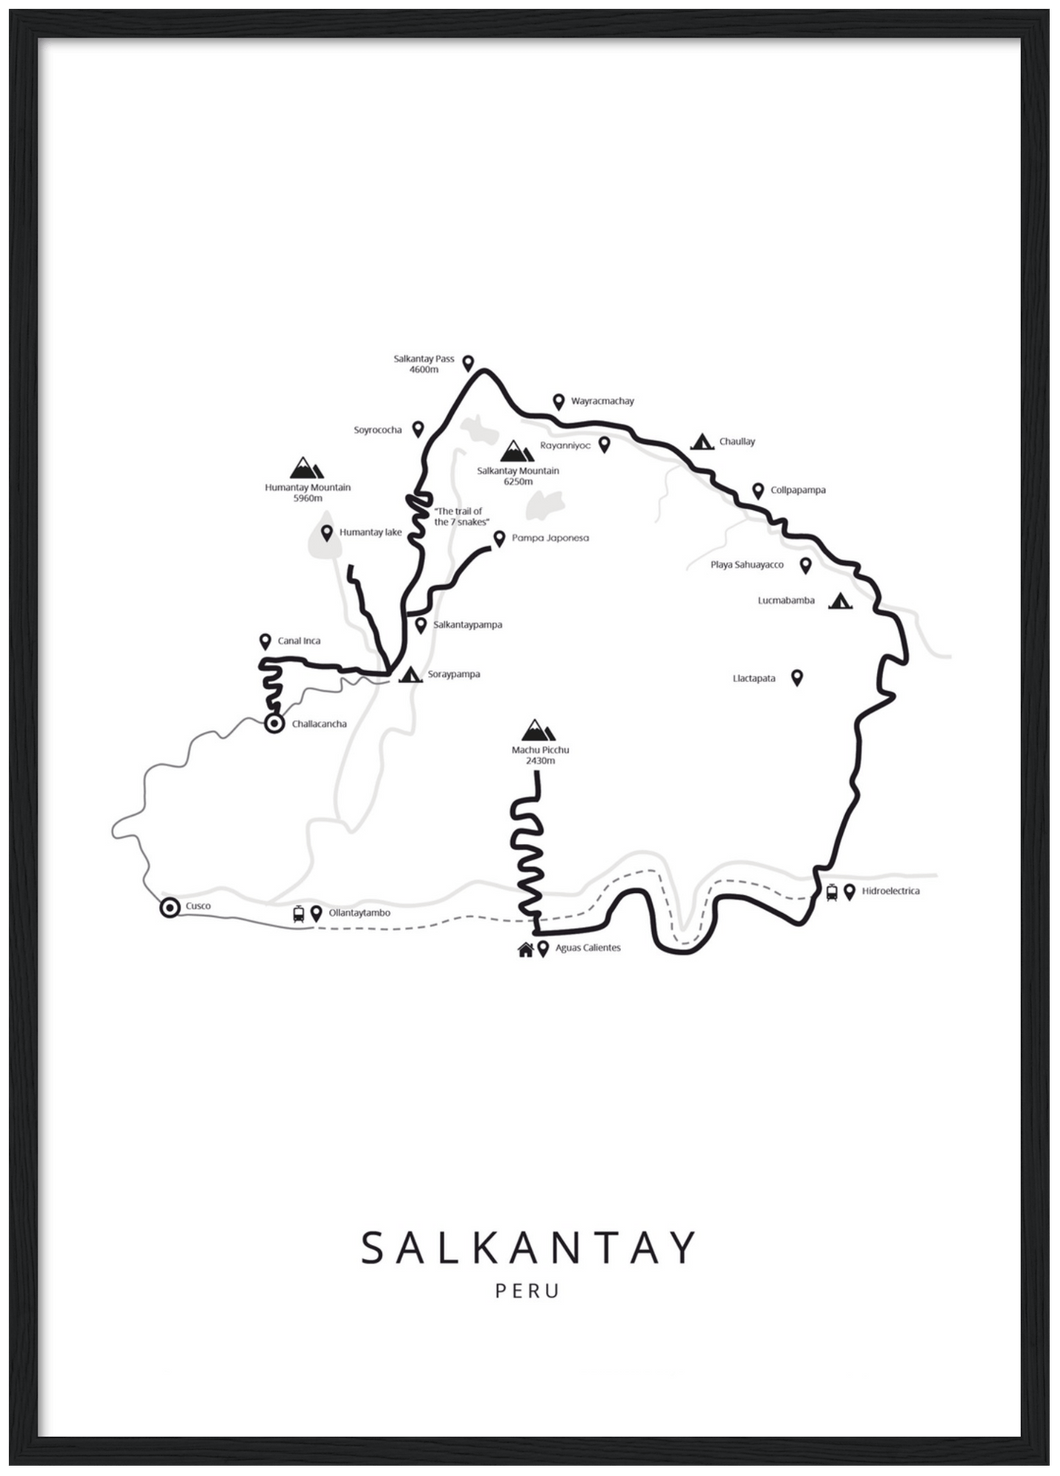 Salkantay poster